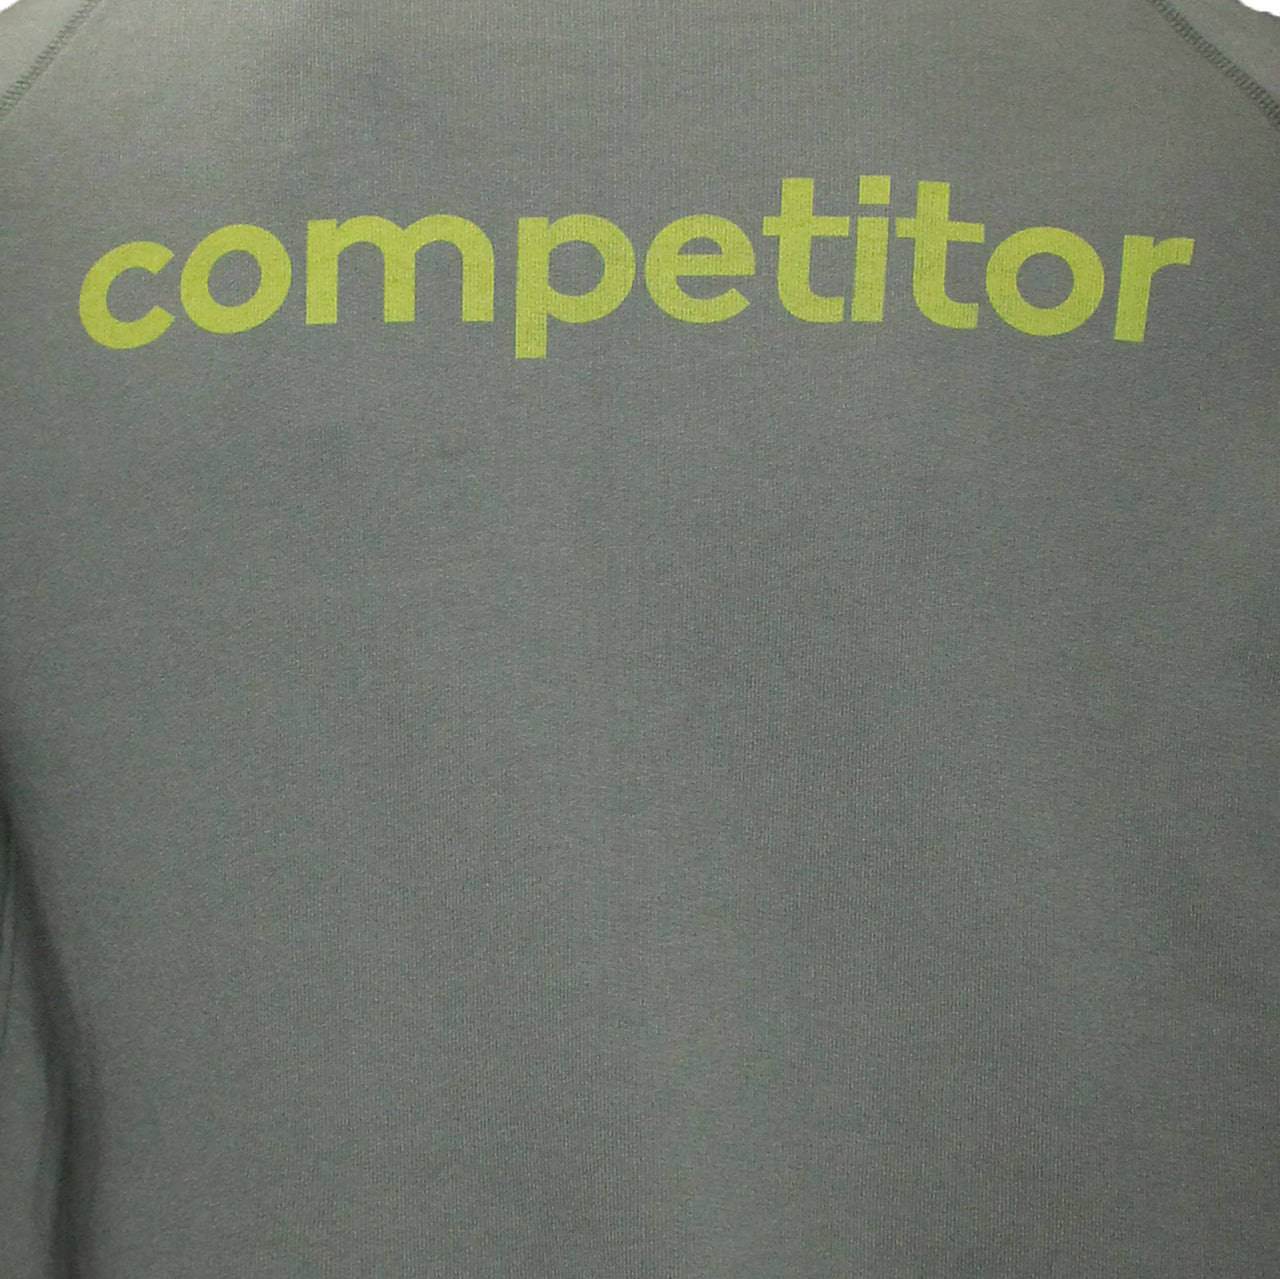 Competitor Sweatshirt Green